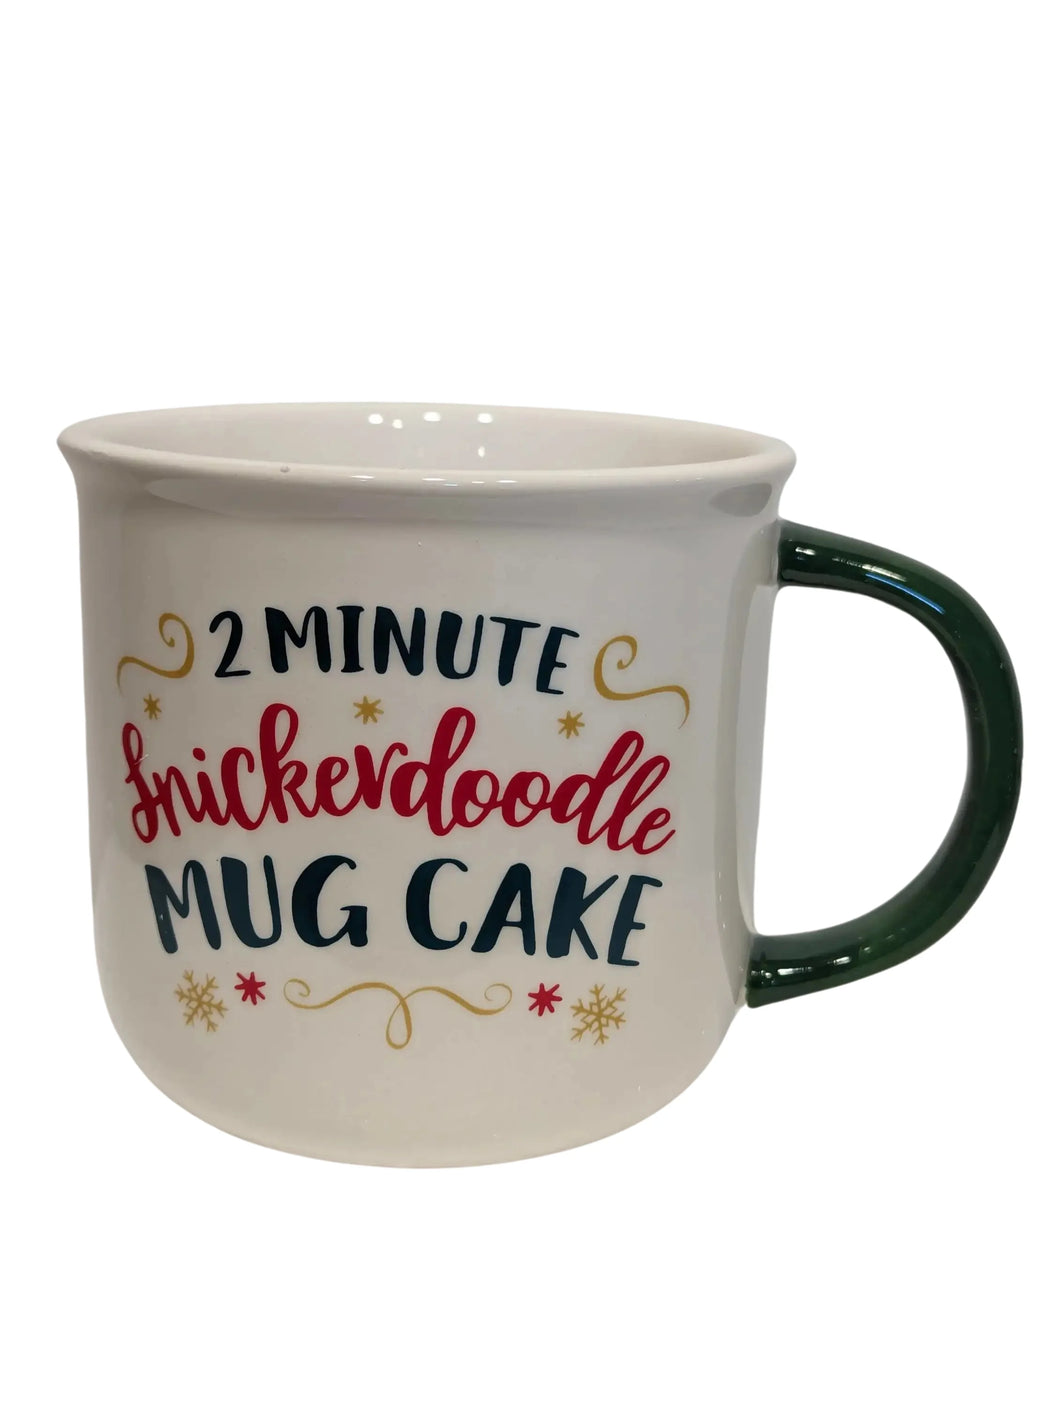 Ceramic Mug - Snickerdoodle Mug Cake with Recipe